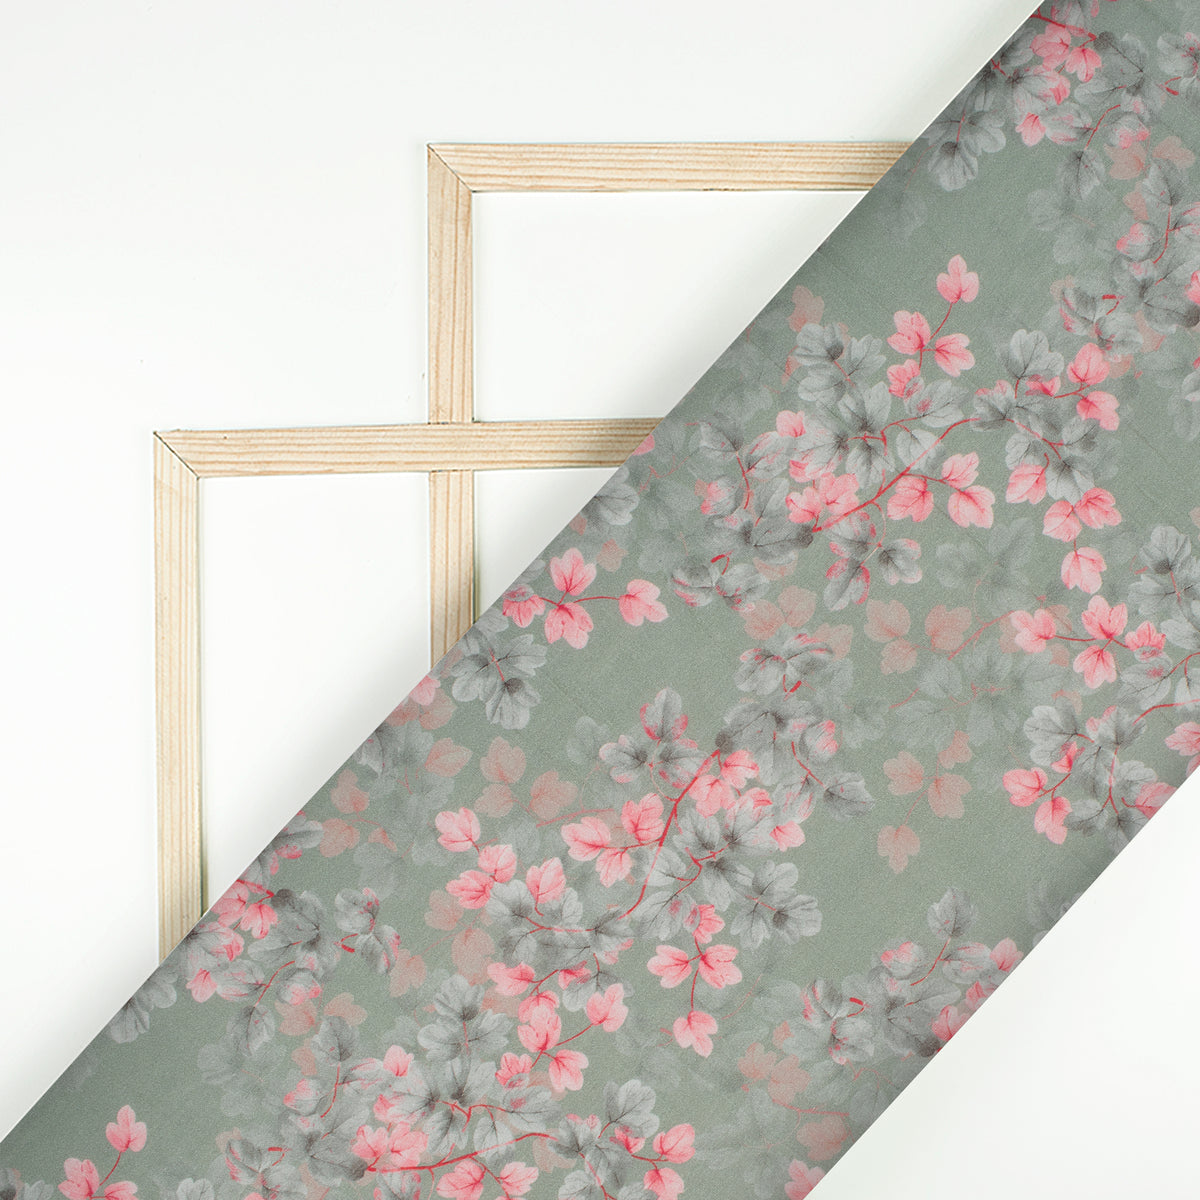 Slate Grey And Taffy Pink Floral Pattern Digital Print Viscose Chanderi Fabric